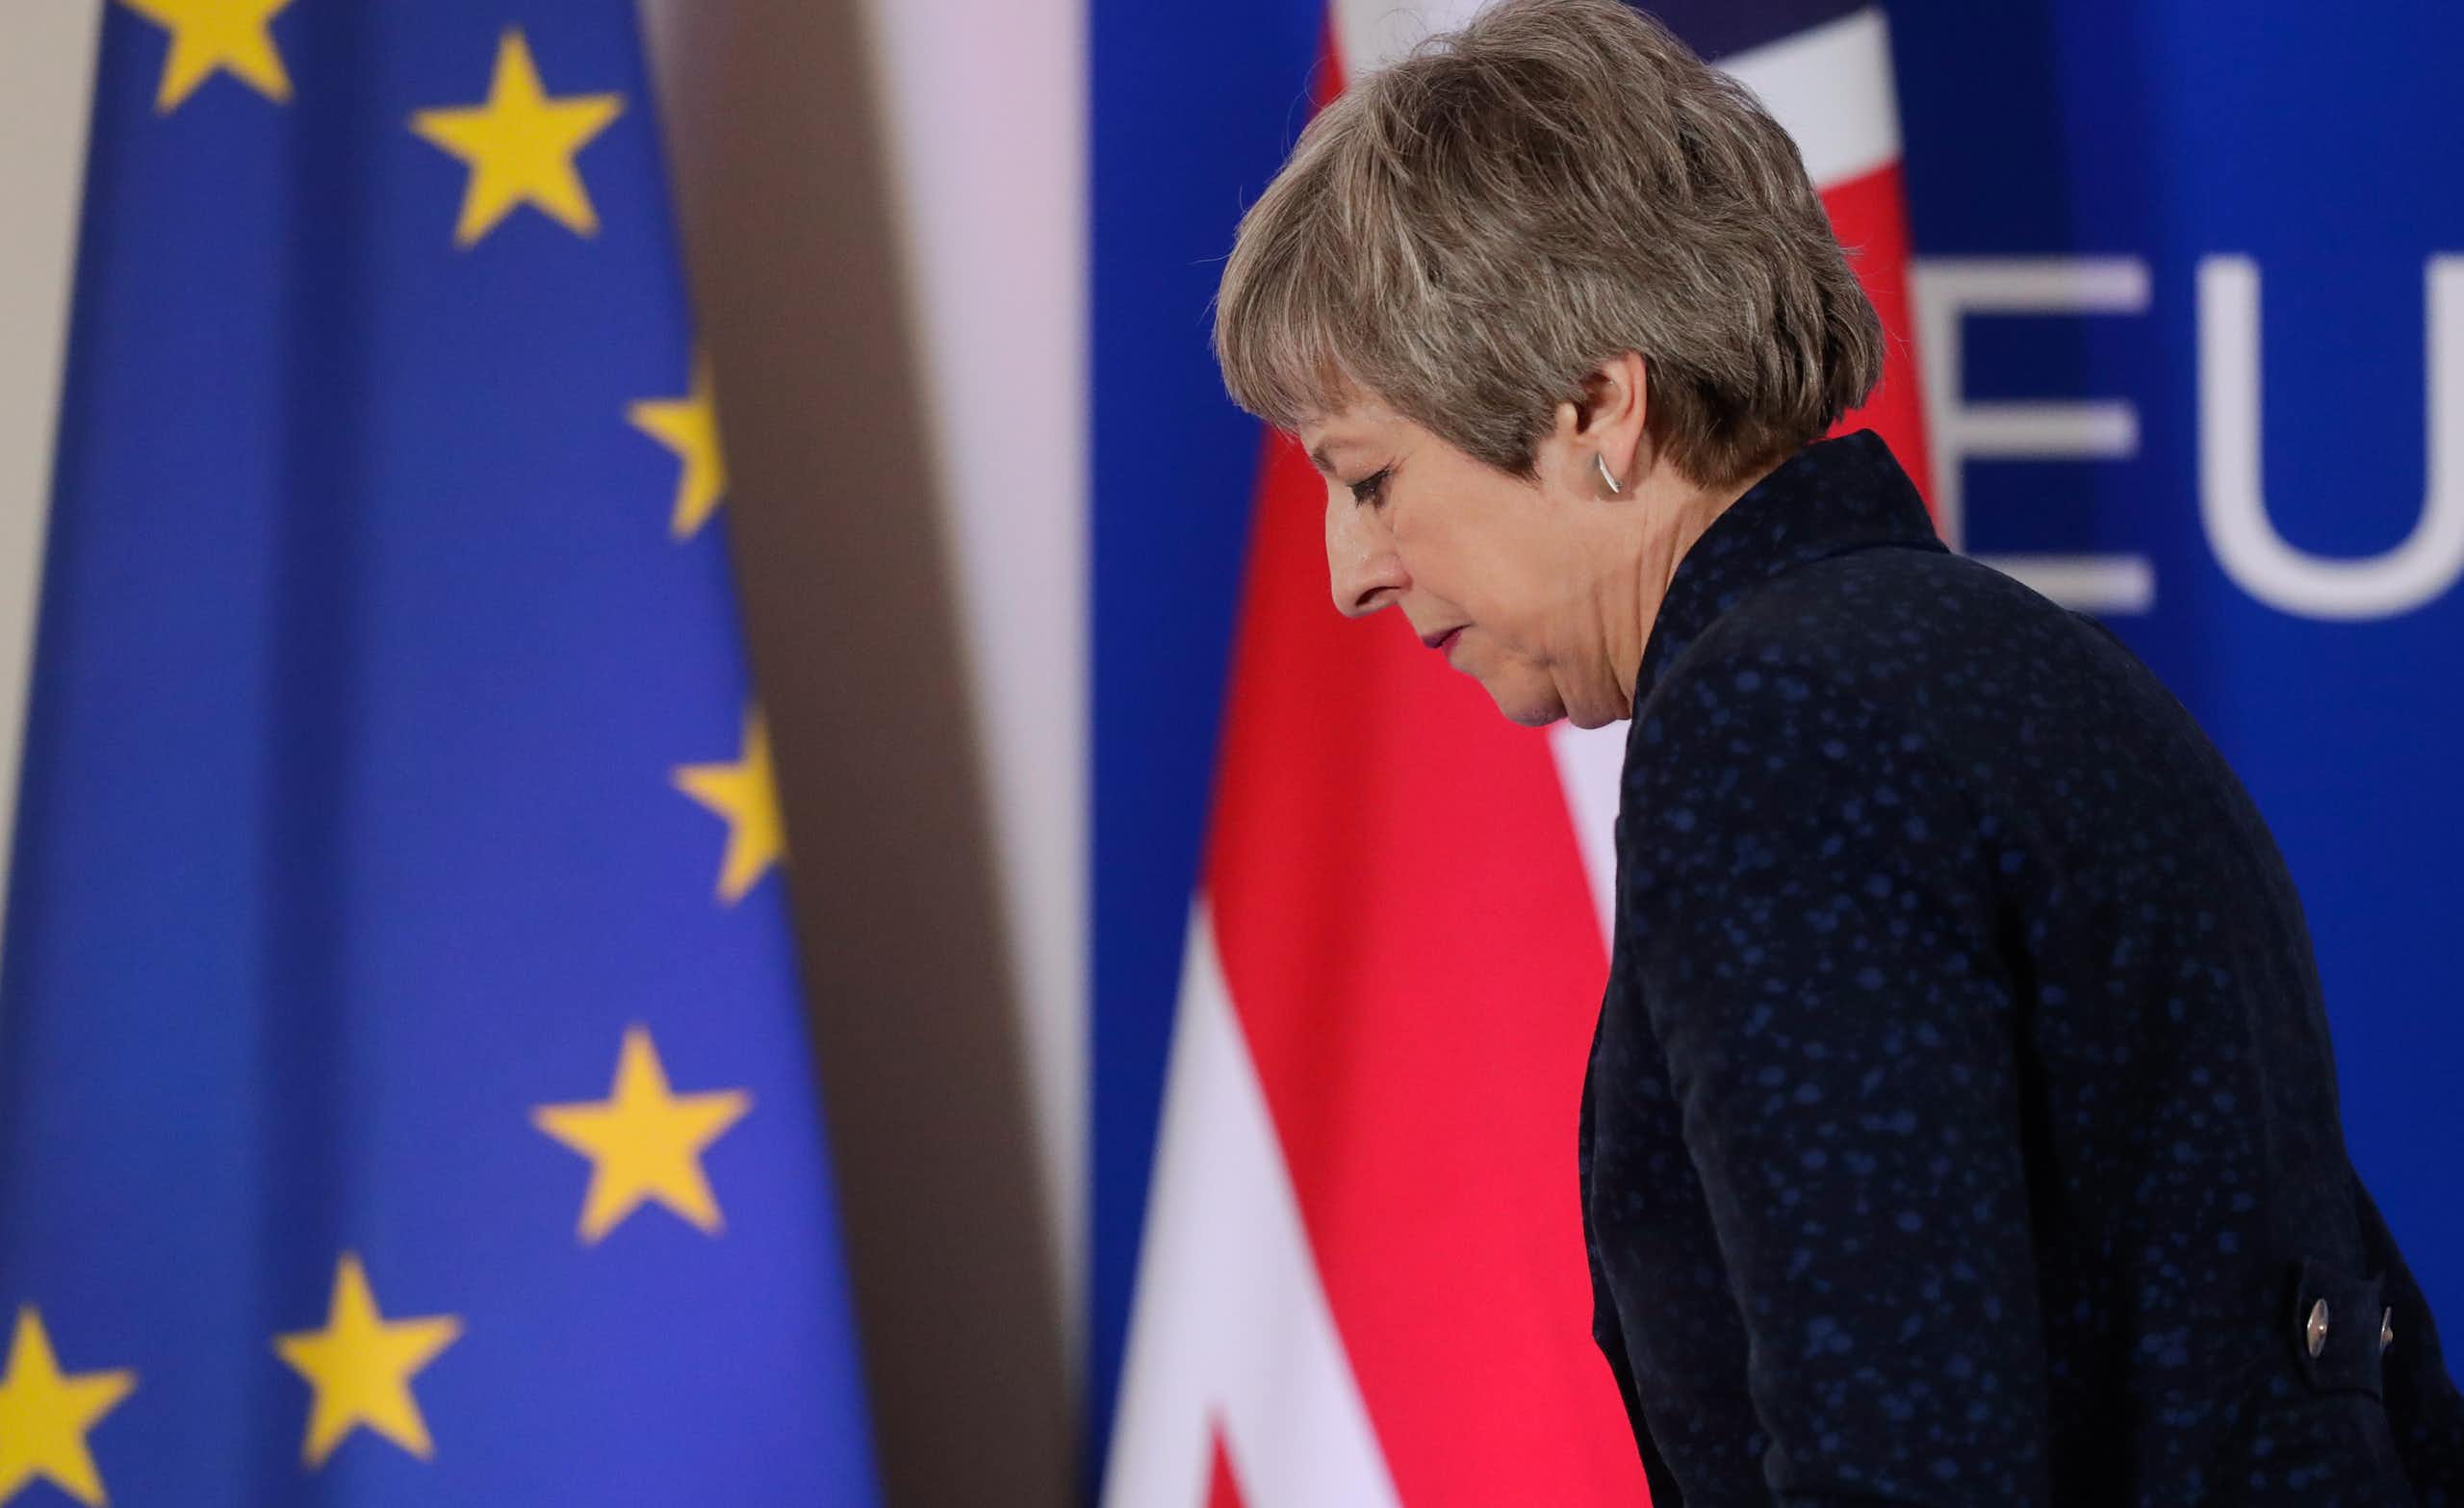 Theresa May sadly walking in front of an EU and UK flag